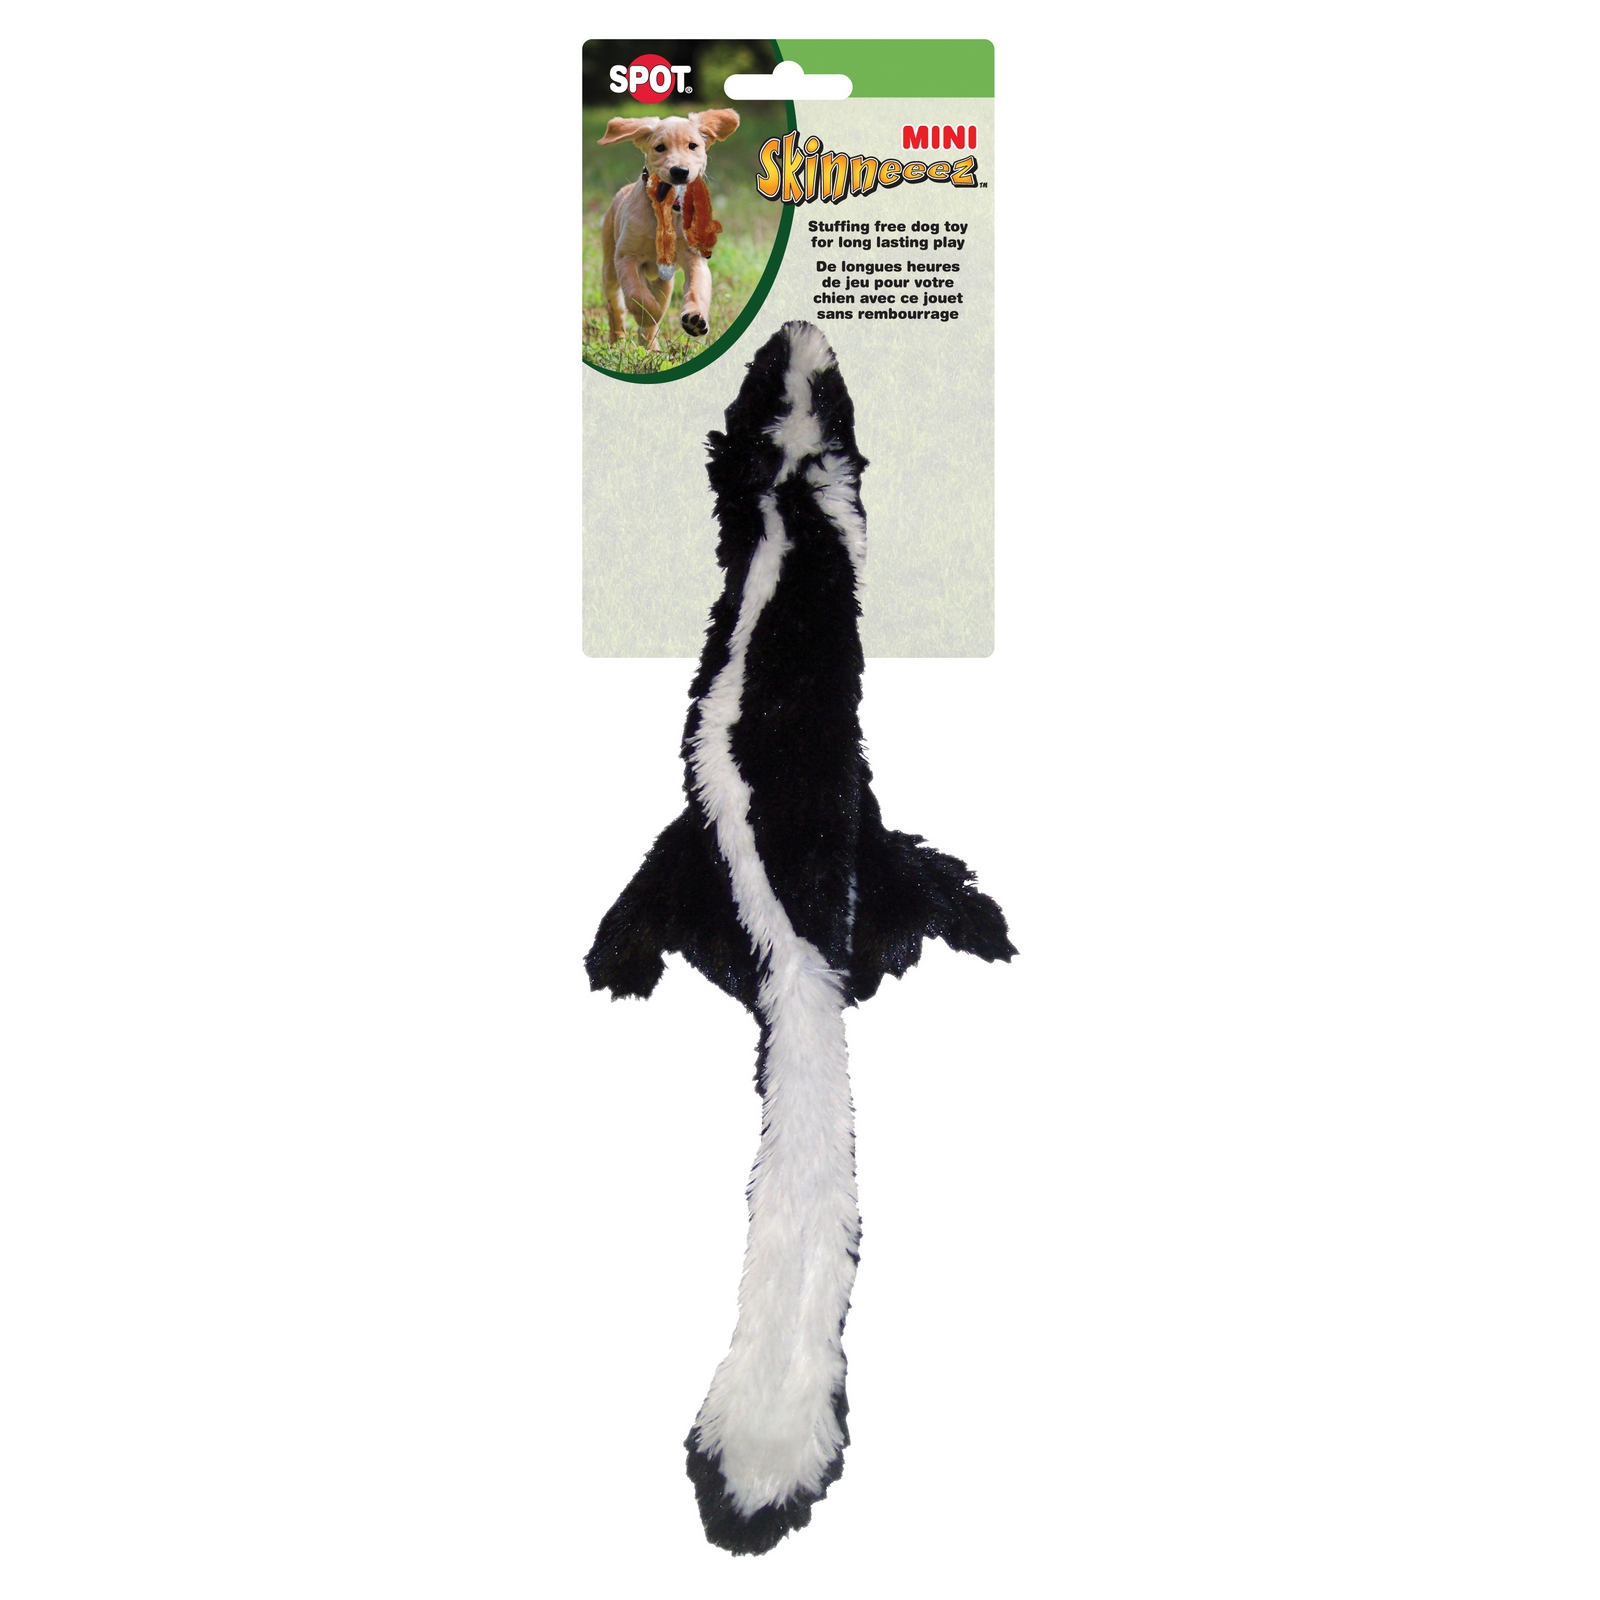 Skinneeez Stuffing Free Dog Toy 14" Skunk